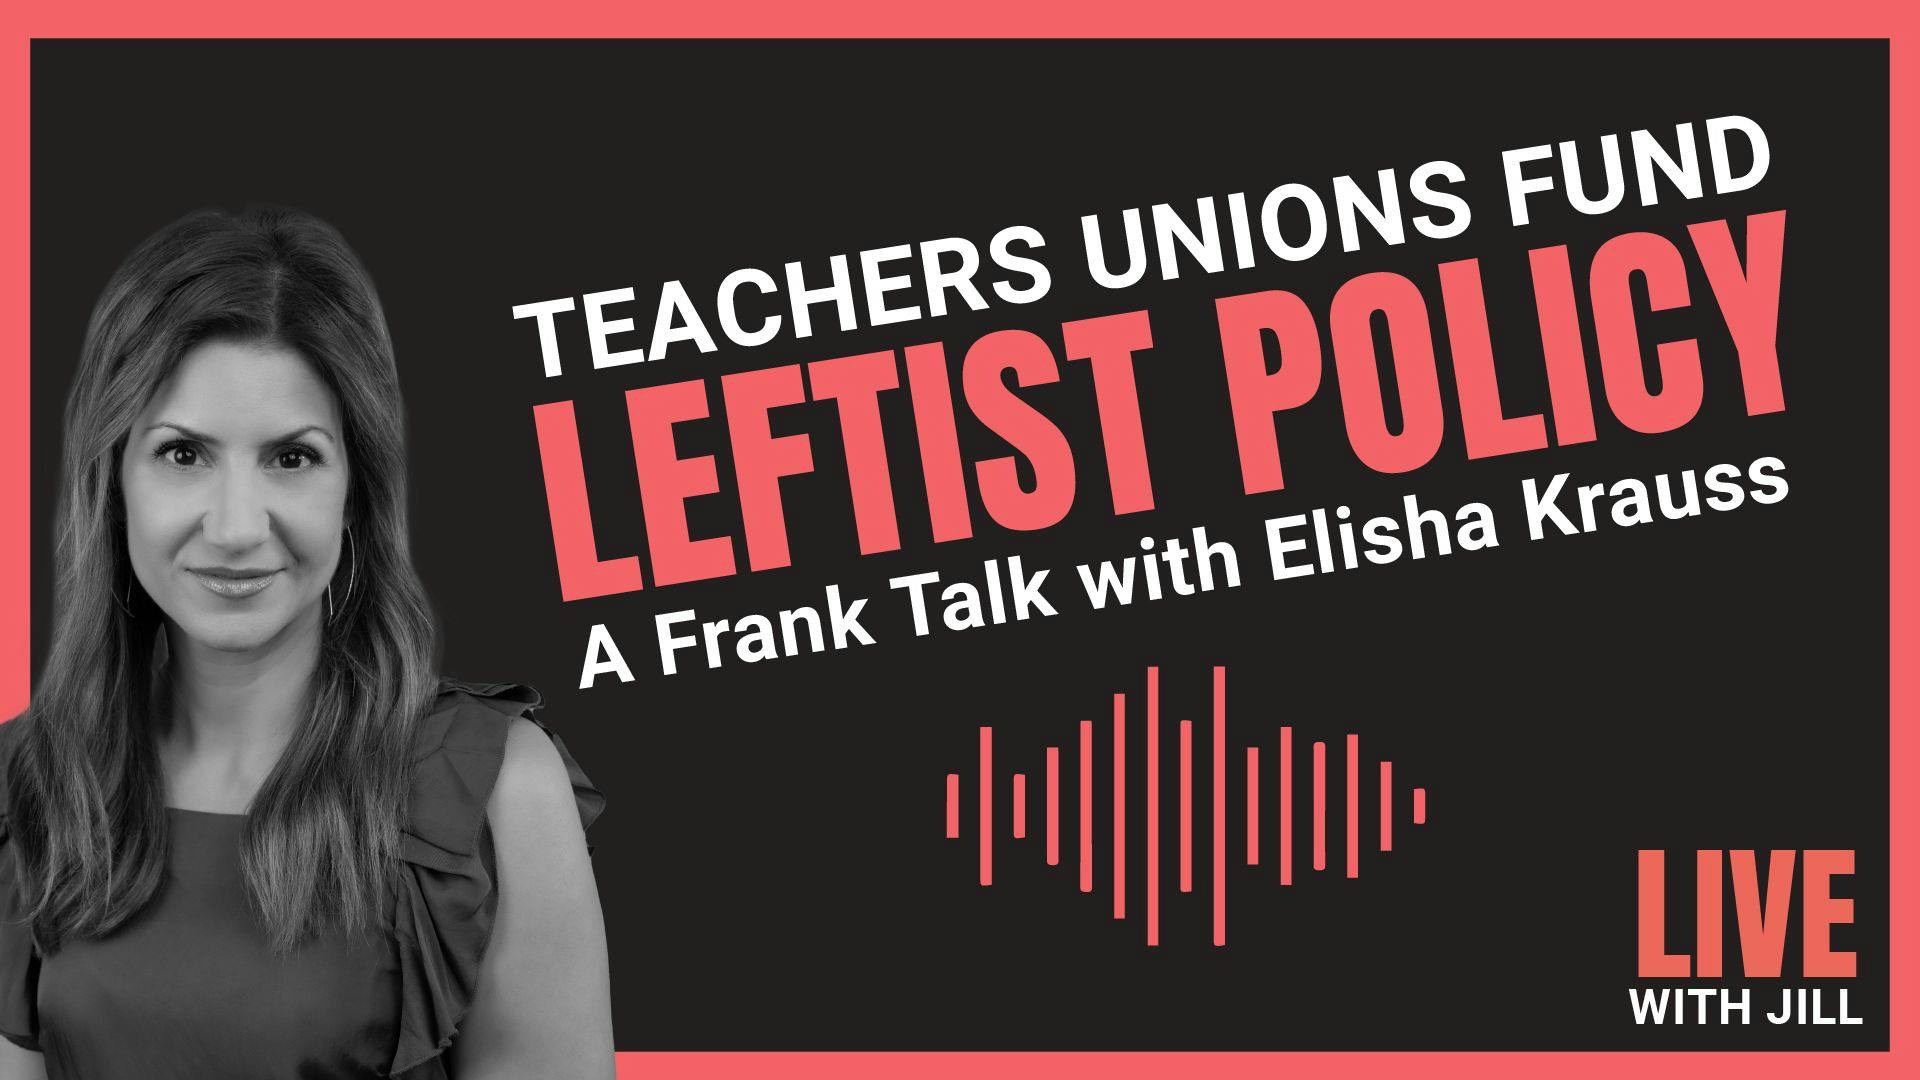 Teachers Unions Fund Leftist Policy?